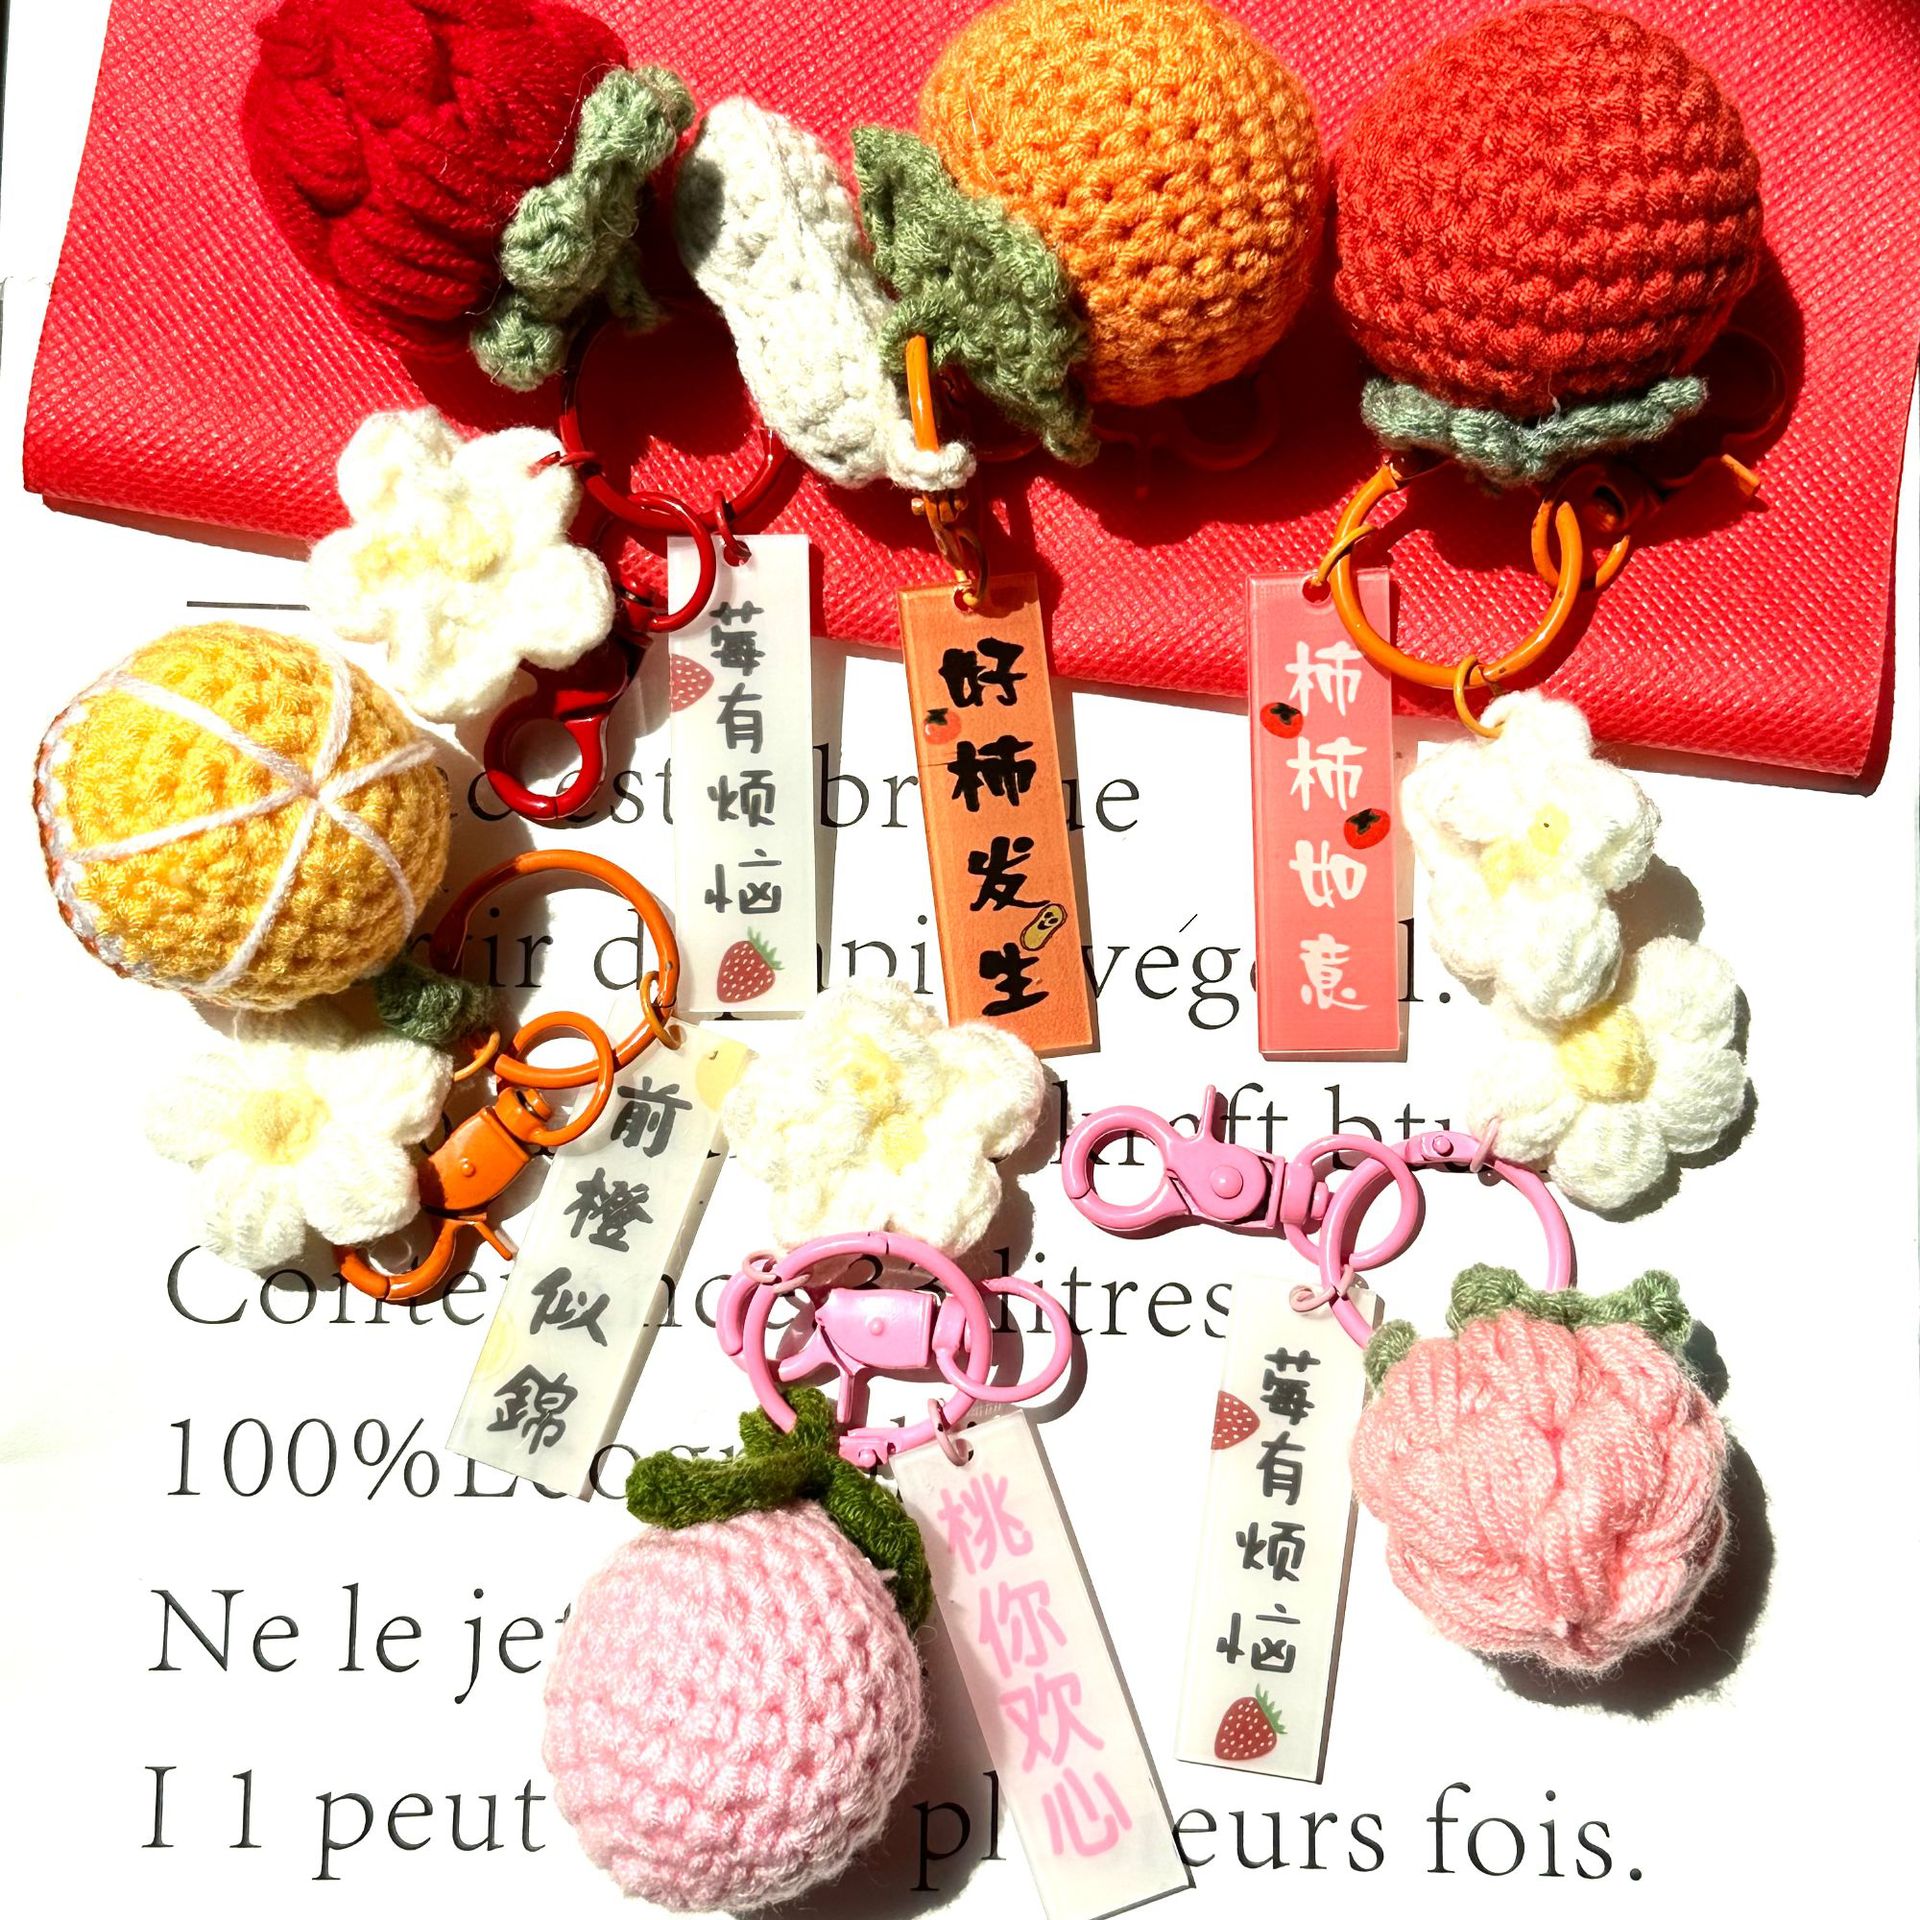 plush crocheted good things happen pendant hand-woven wool persimmon good persimmon peanut bag keychain gift